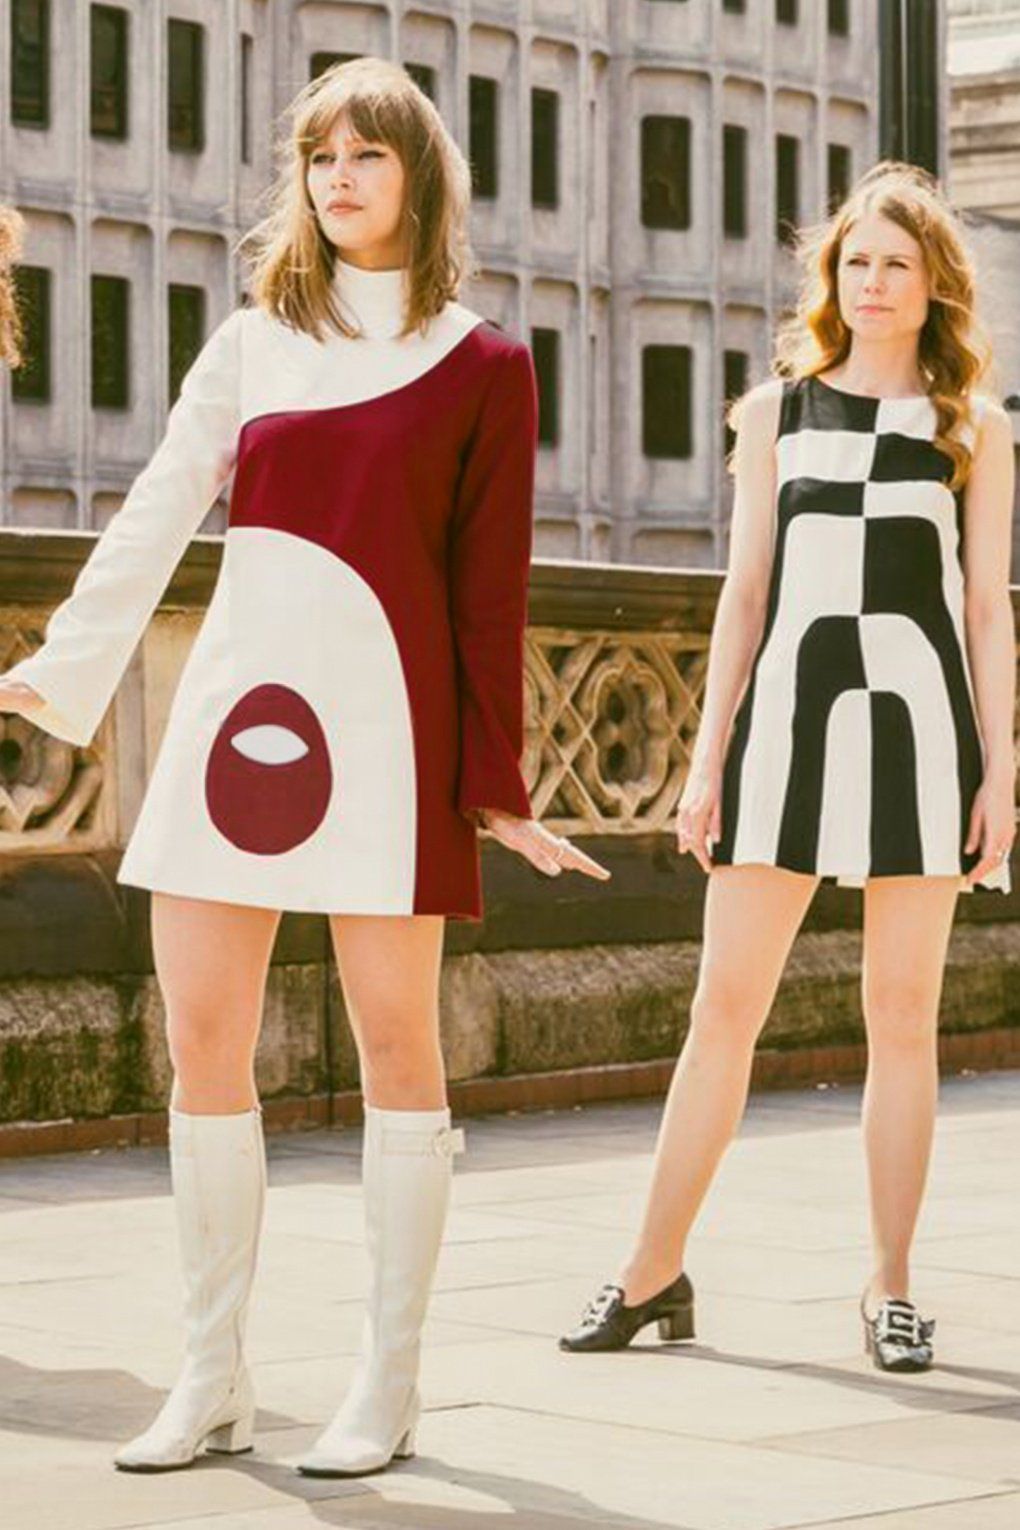 1960s Fashion: What Did Women Wear? - 1960s Fashion: What Did Women Wear? -   17 style Retro 1960s ideas